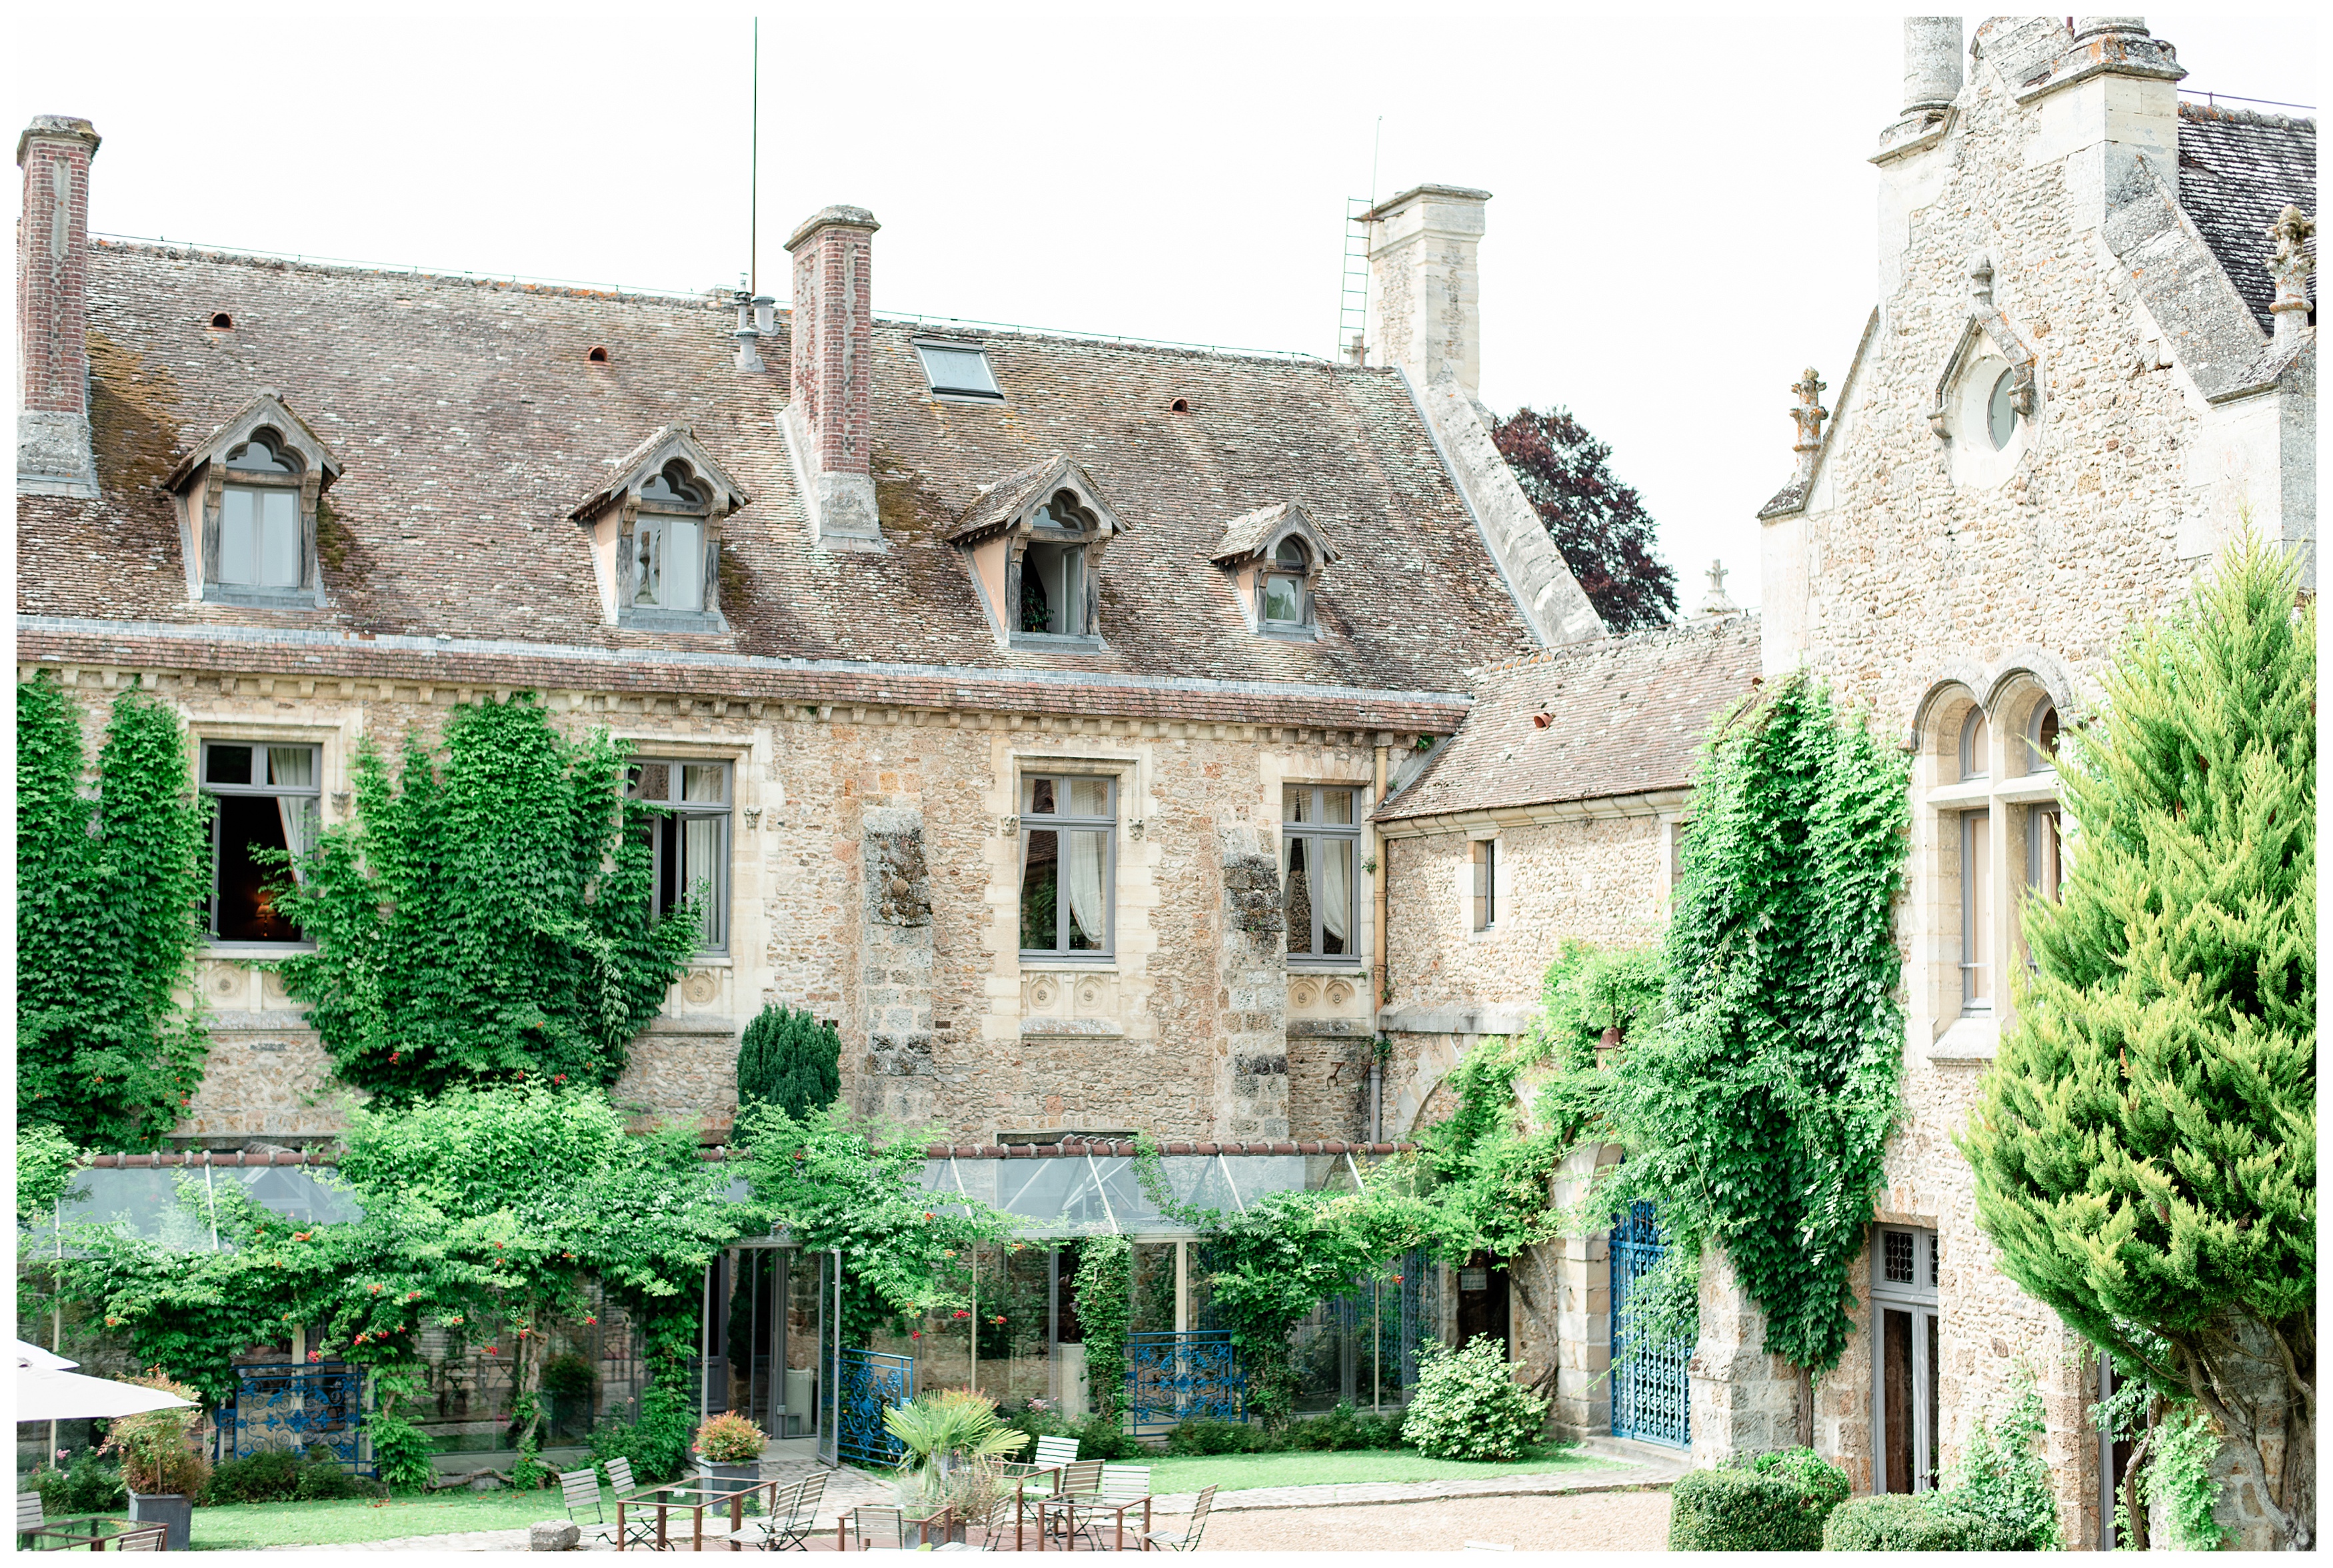 abbaye des vaux de cernay is now a hotel and event space just outside paris